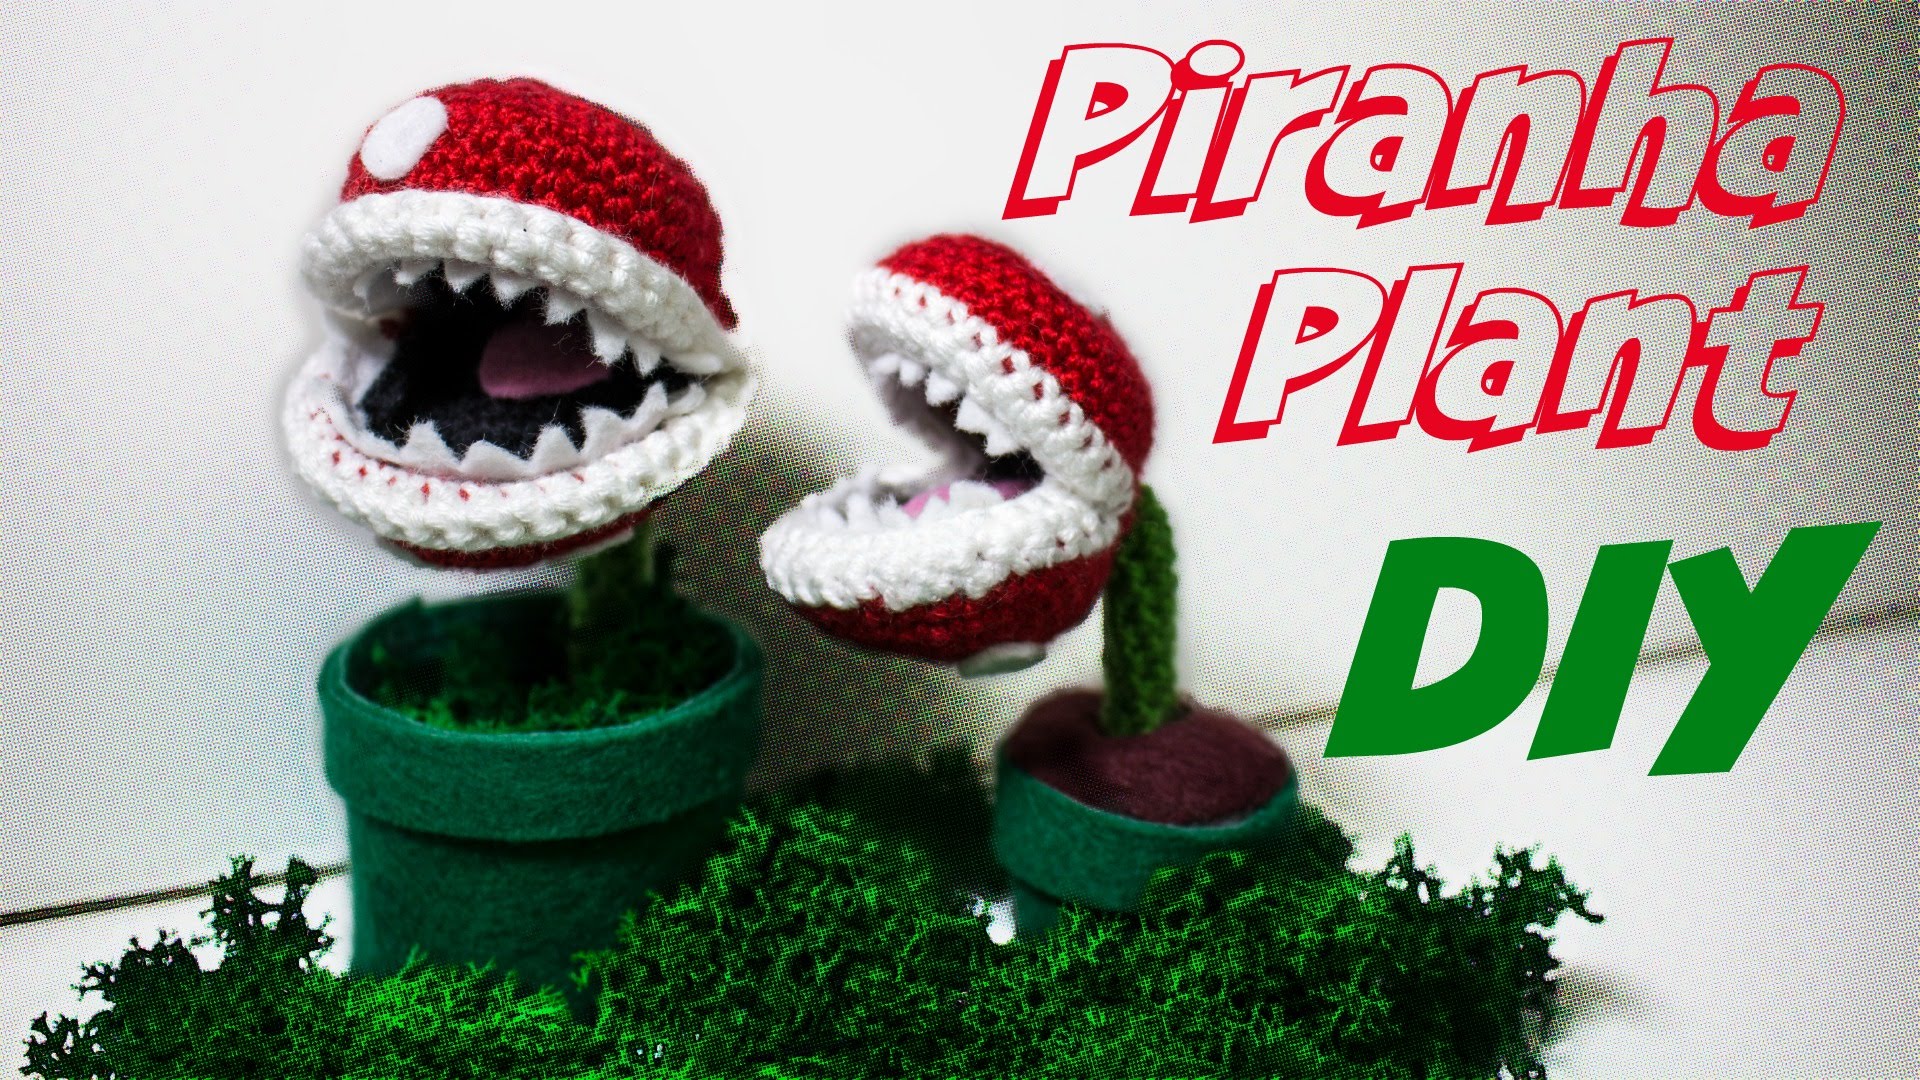 Piranha Pflanze (Super Mario) -  - Gratis-Anleitungen